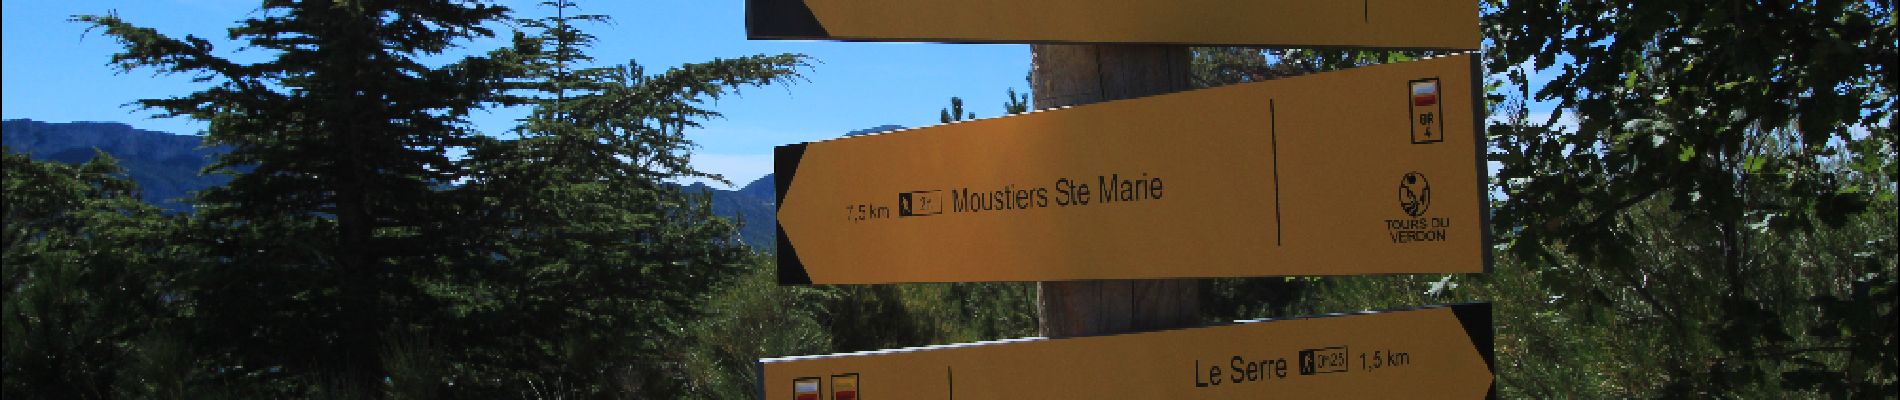 Point of interest Moustiers-Sainte-Marie - moustiers - Photo